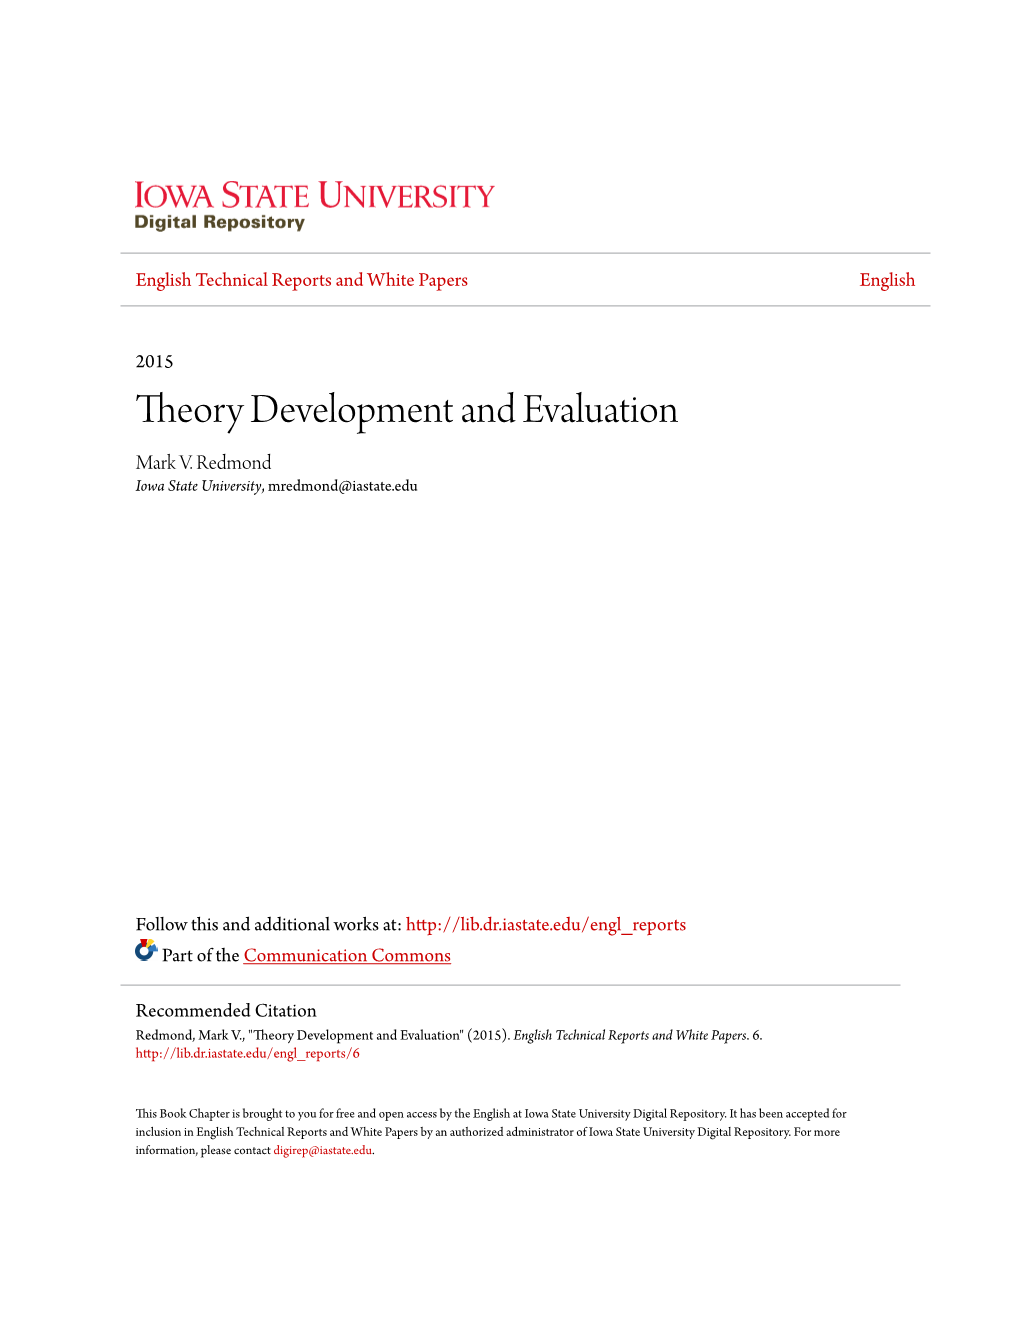 Theory Development and Evaluation Mark V